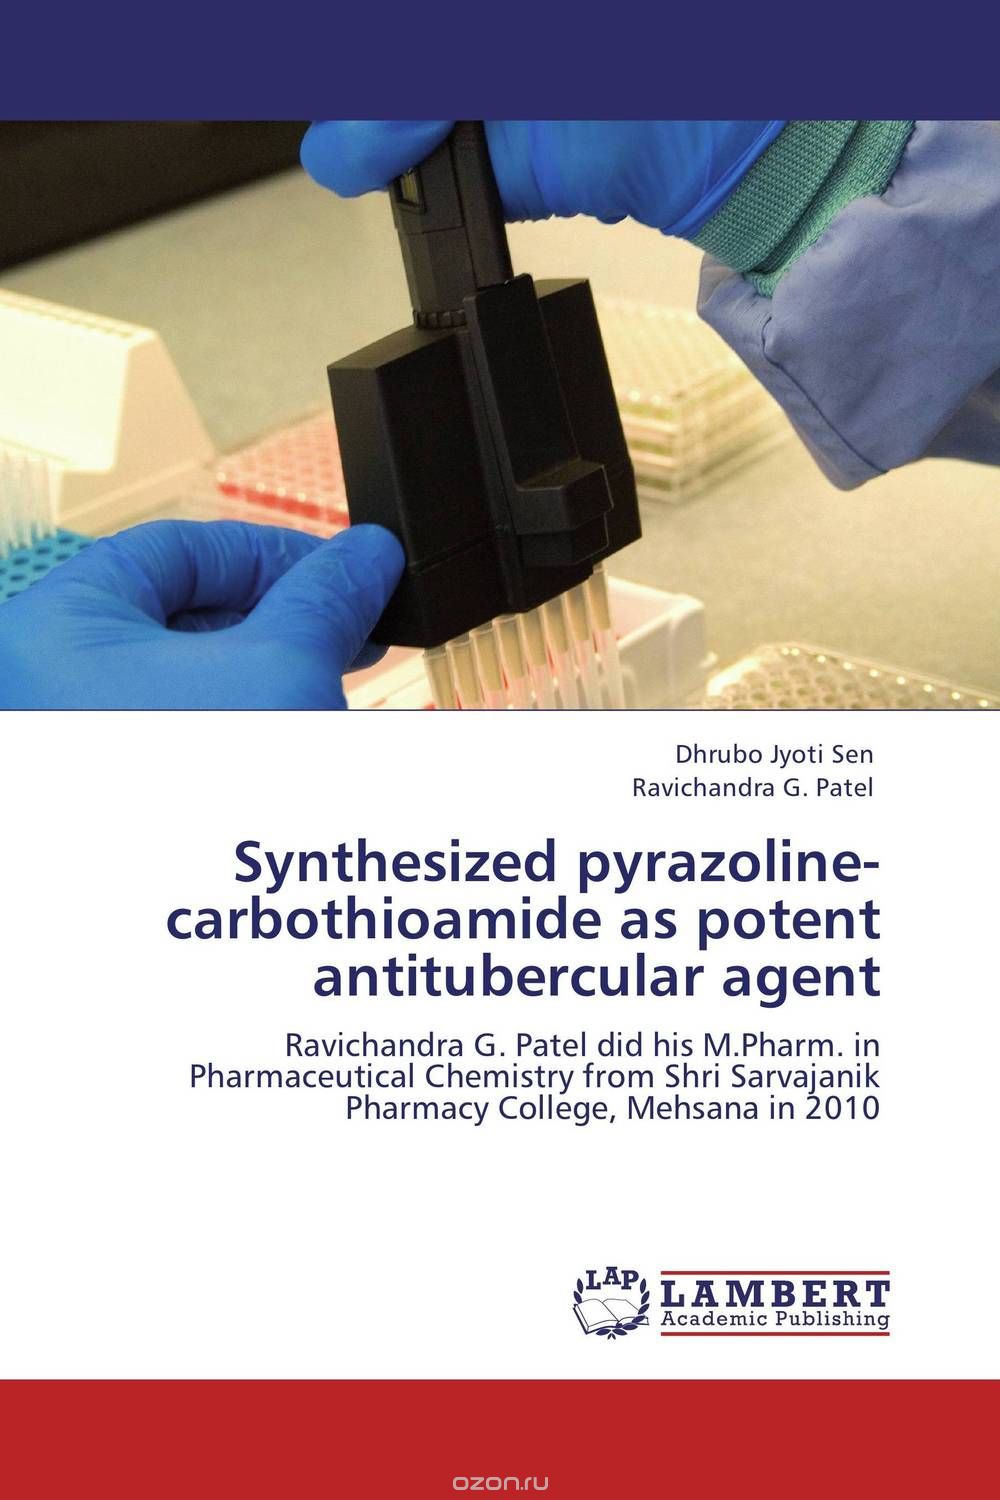 Скачать книгу "Synthesized pyrazoline-carbothioamide as potent antitubercular agent"